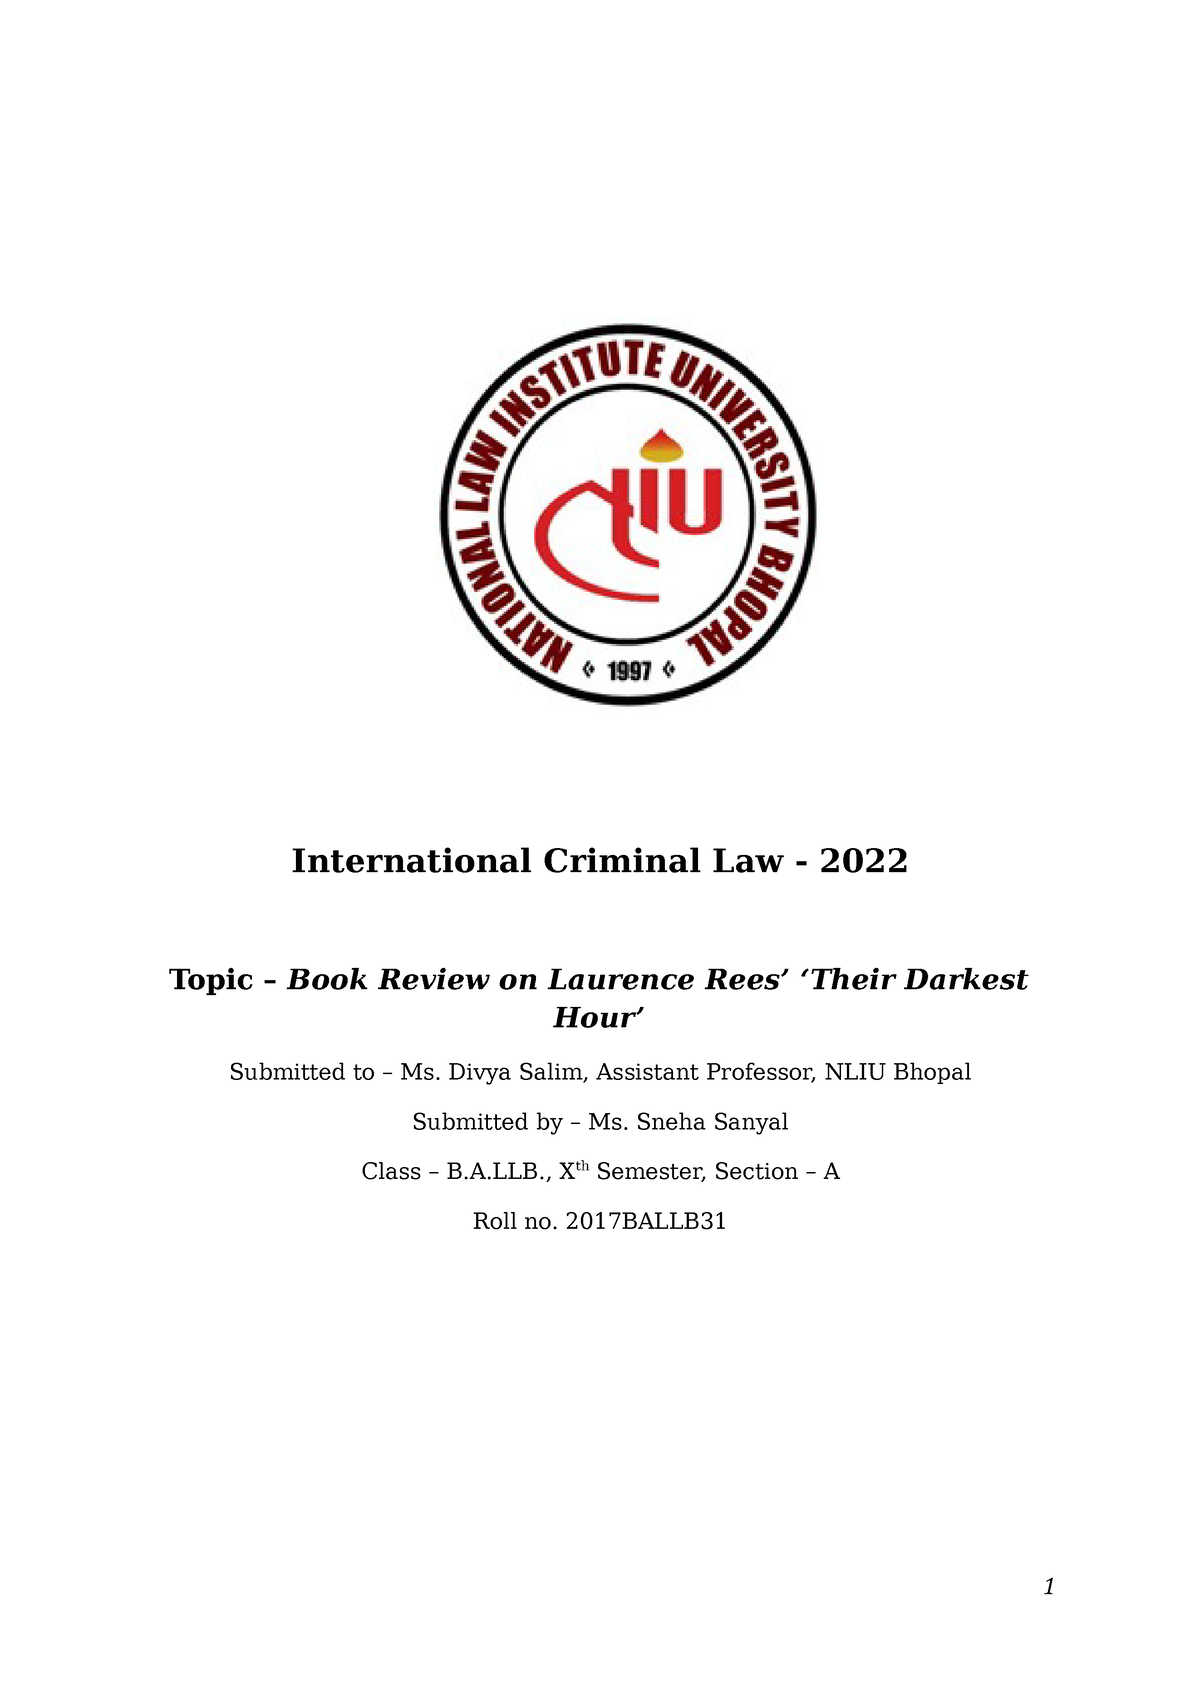 international criminal law dissertation topics